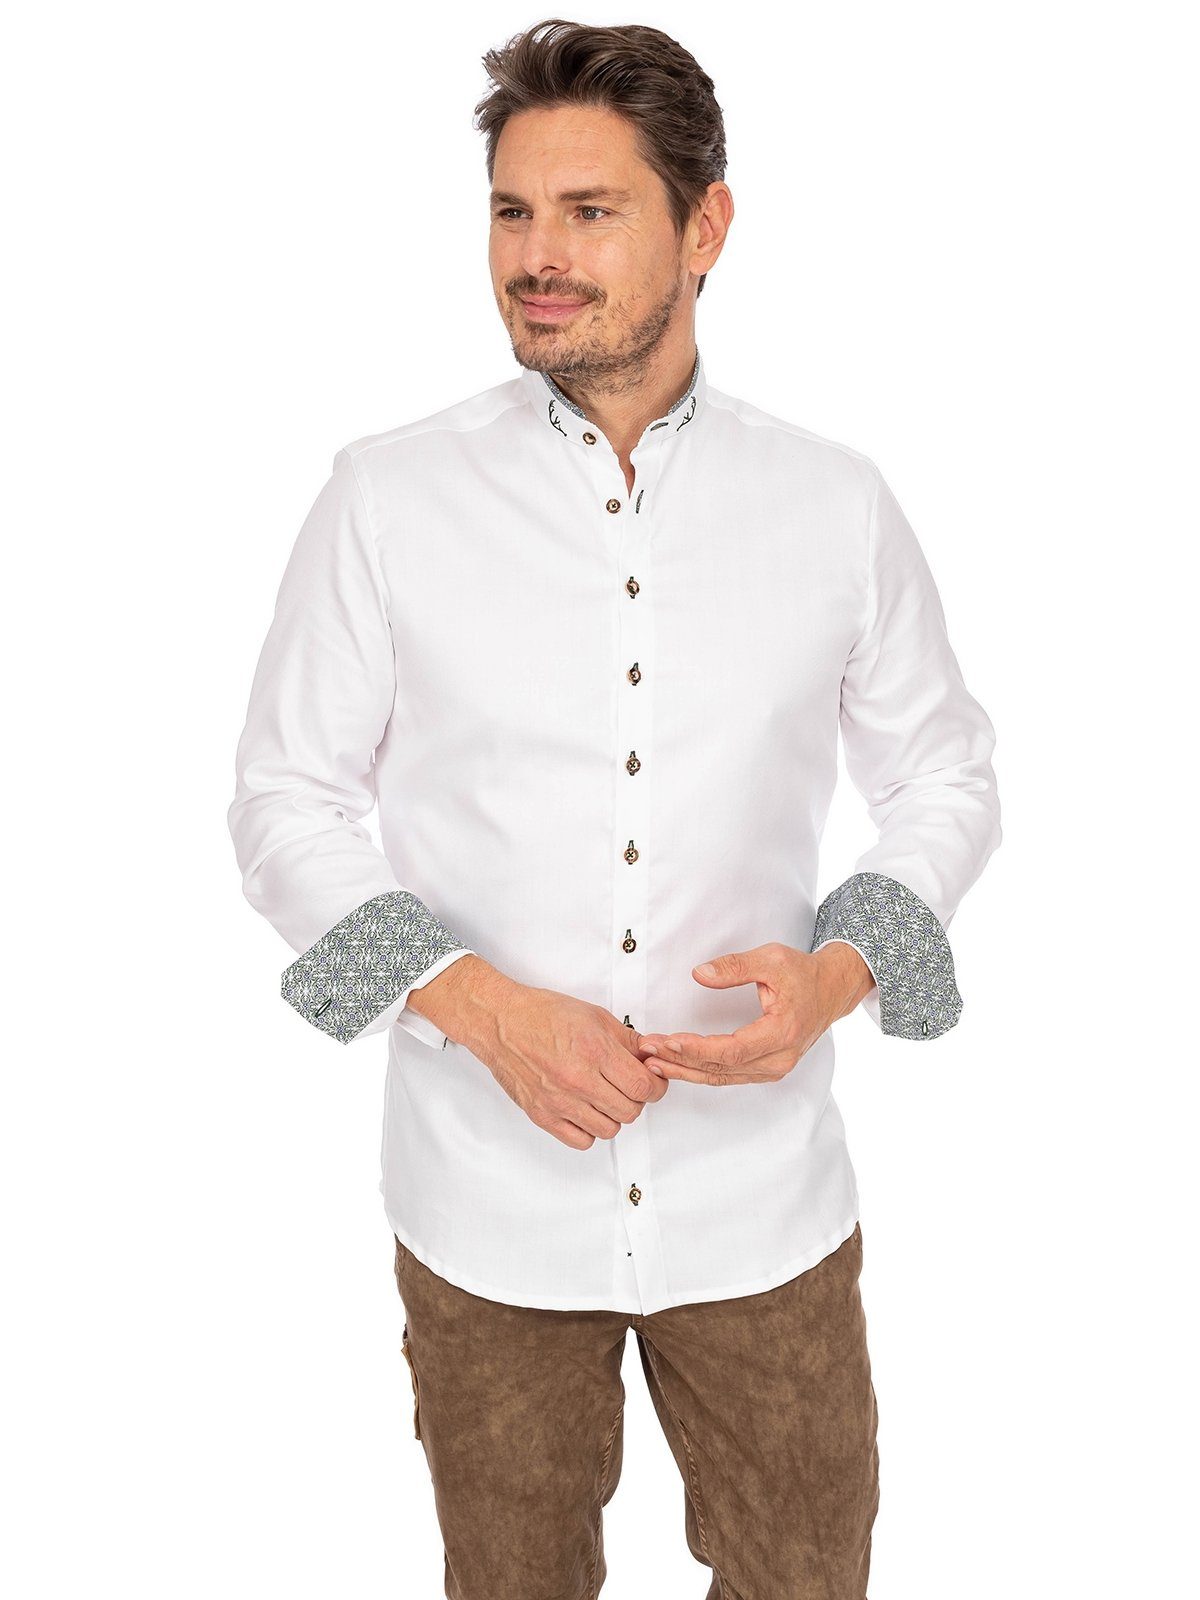 Gipfelstürmer Trachtenhemd oliv weiß Stehkragen Hemd 420000-4246-155 Fi (Slim